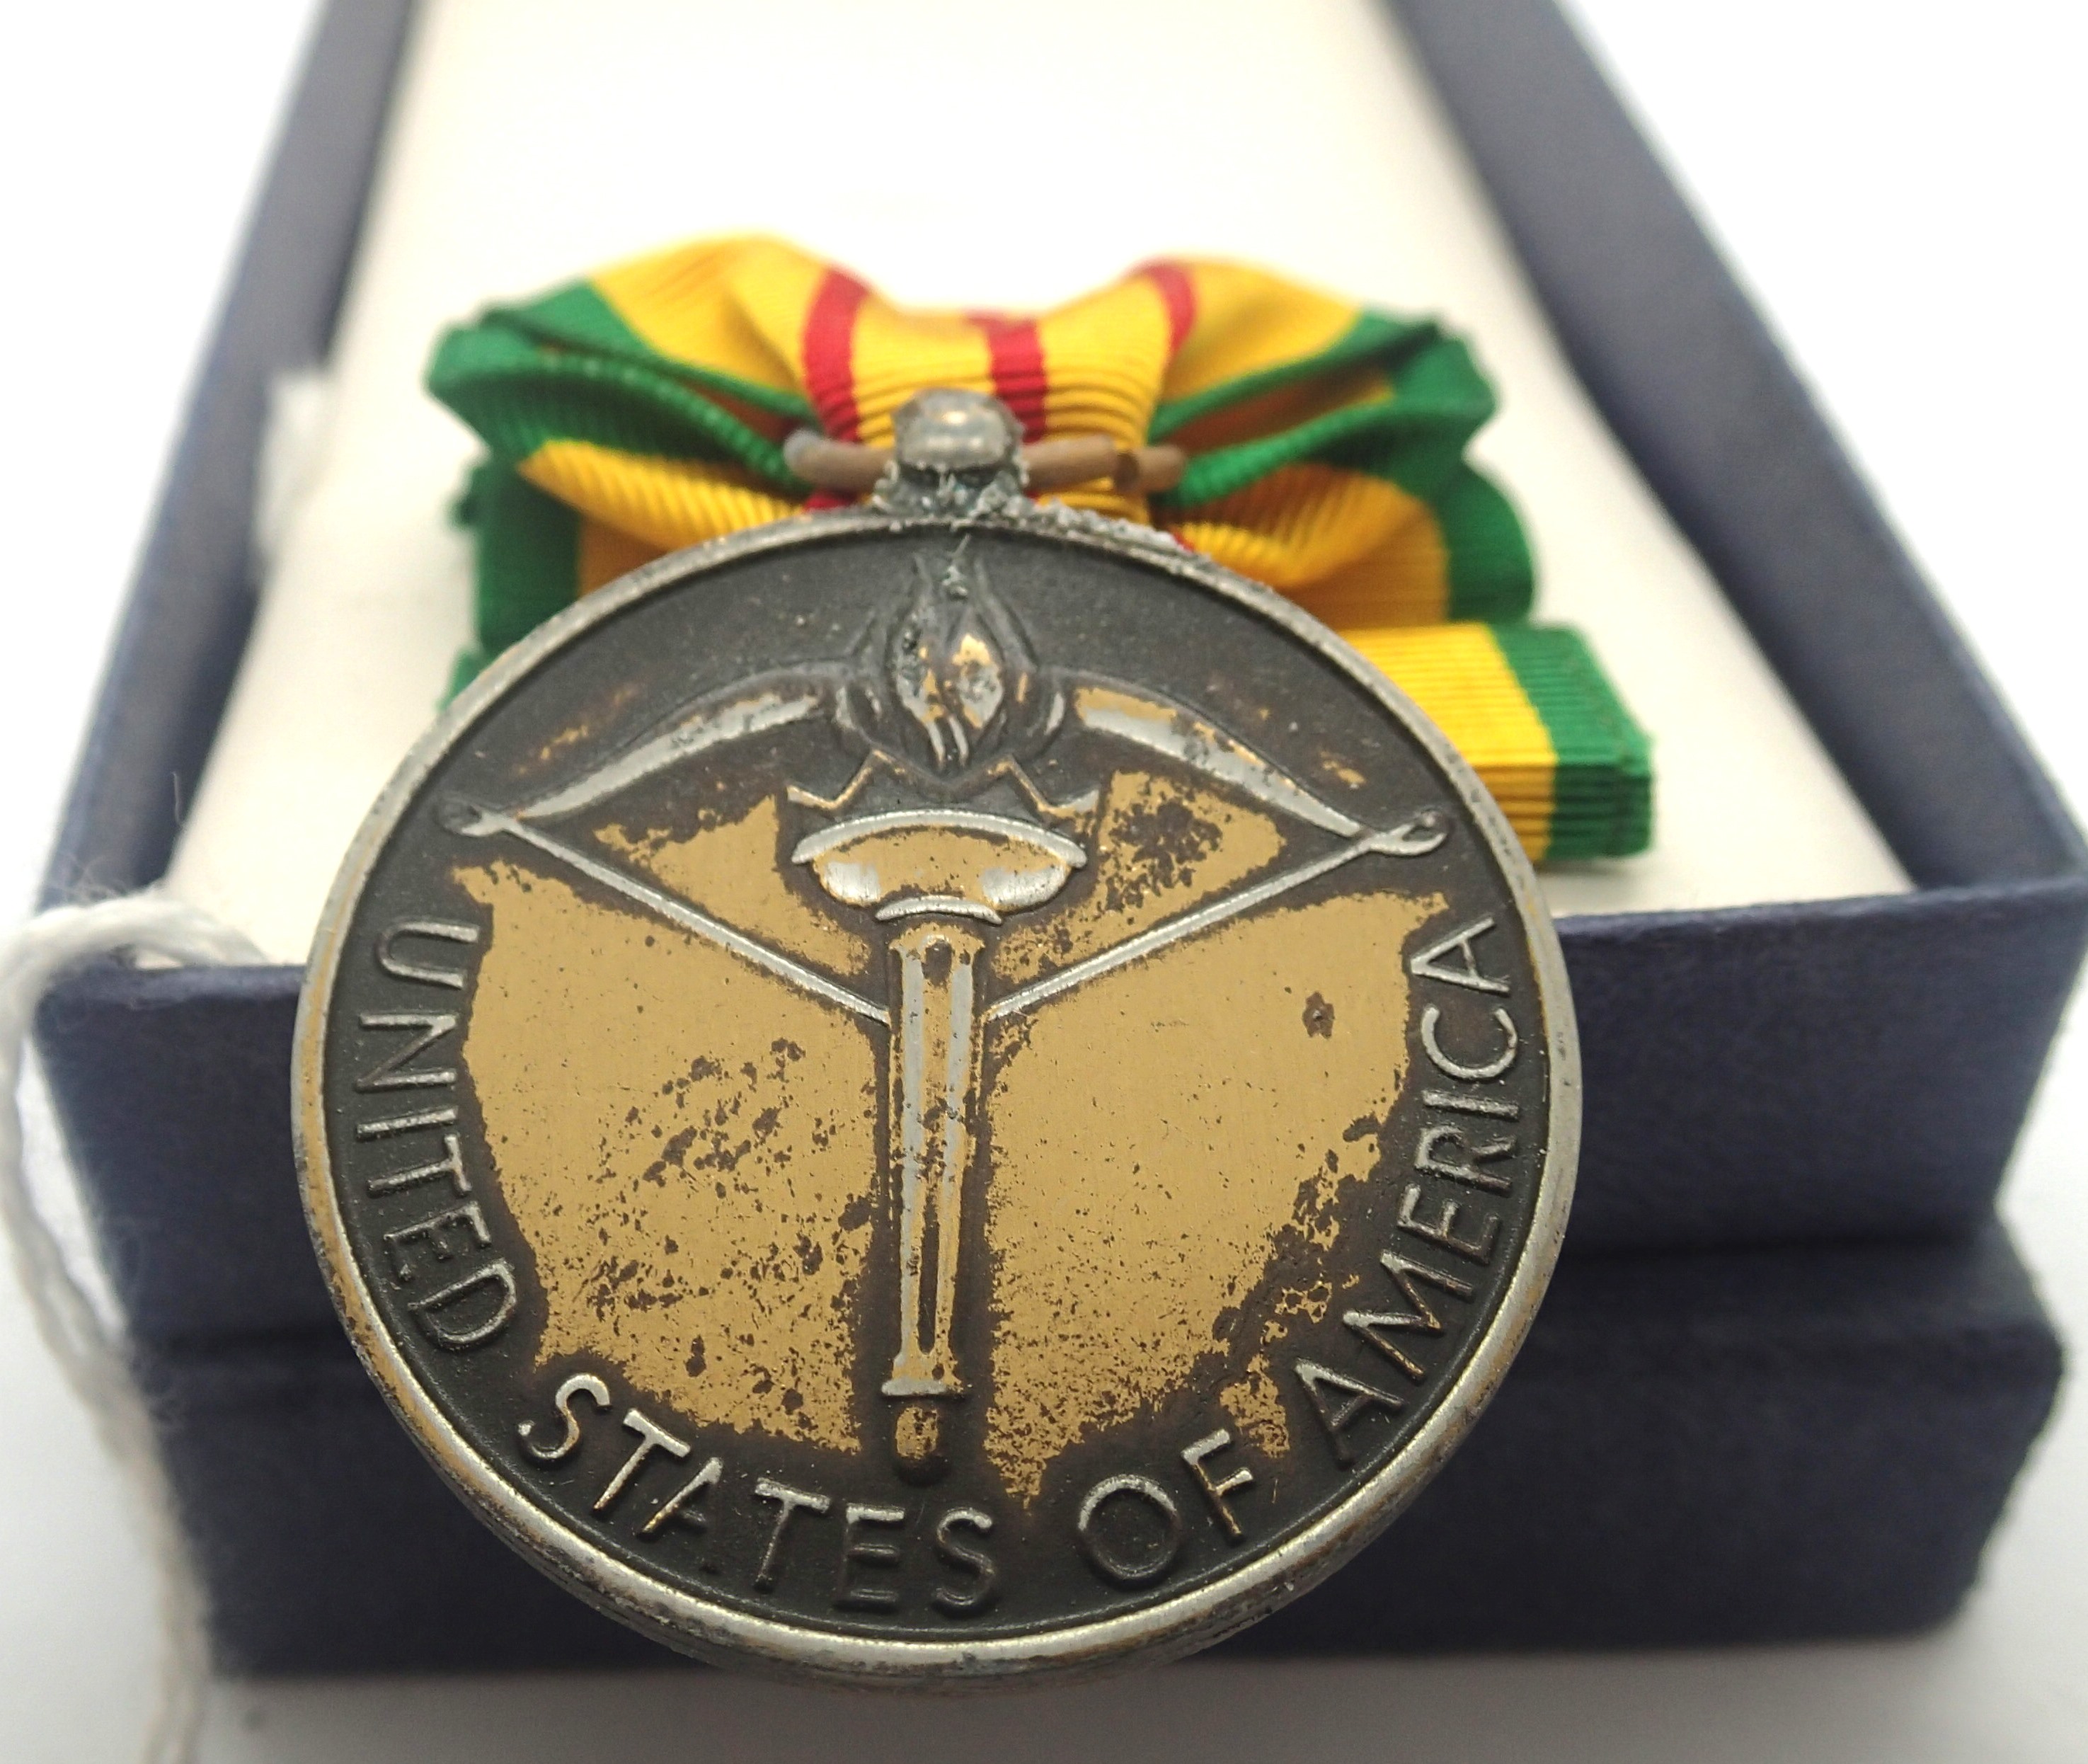 Vietnam War Era. US Vietnam Service Medal in original box. P&P Group 1 (£14+VAT for the first lot - Image 2 of 2